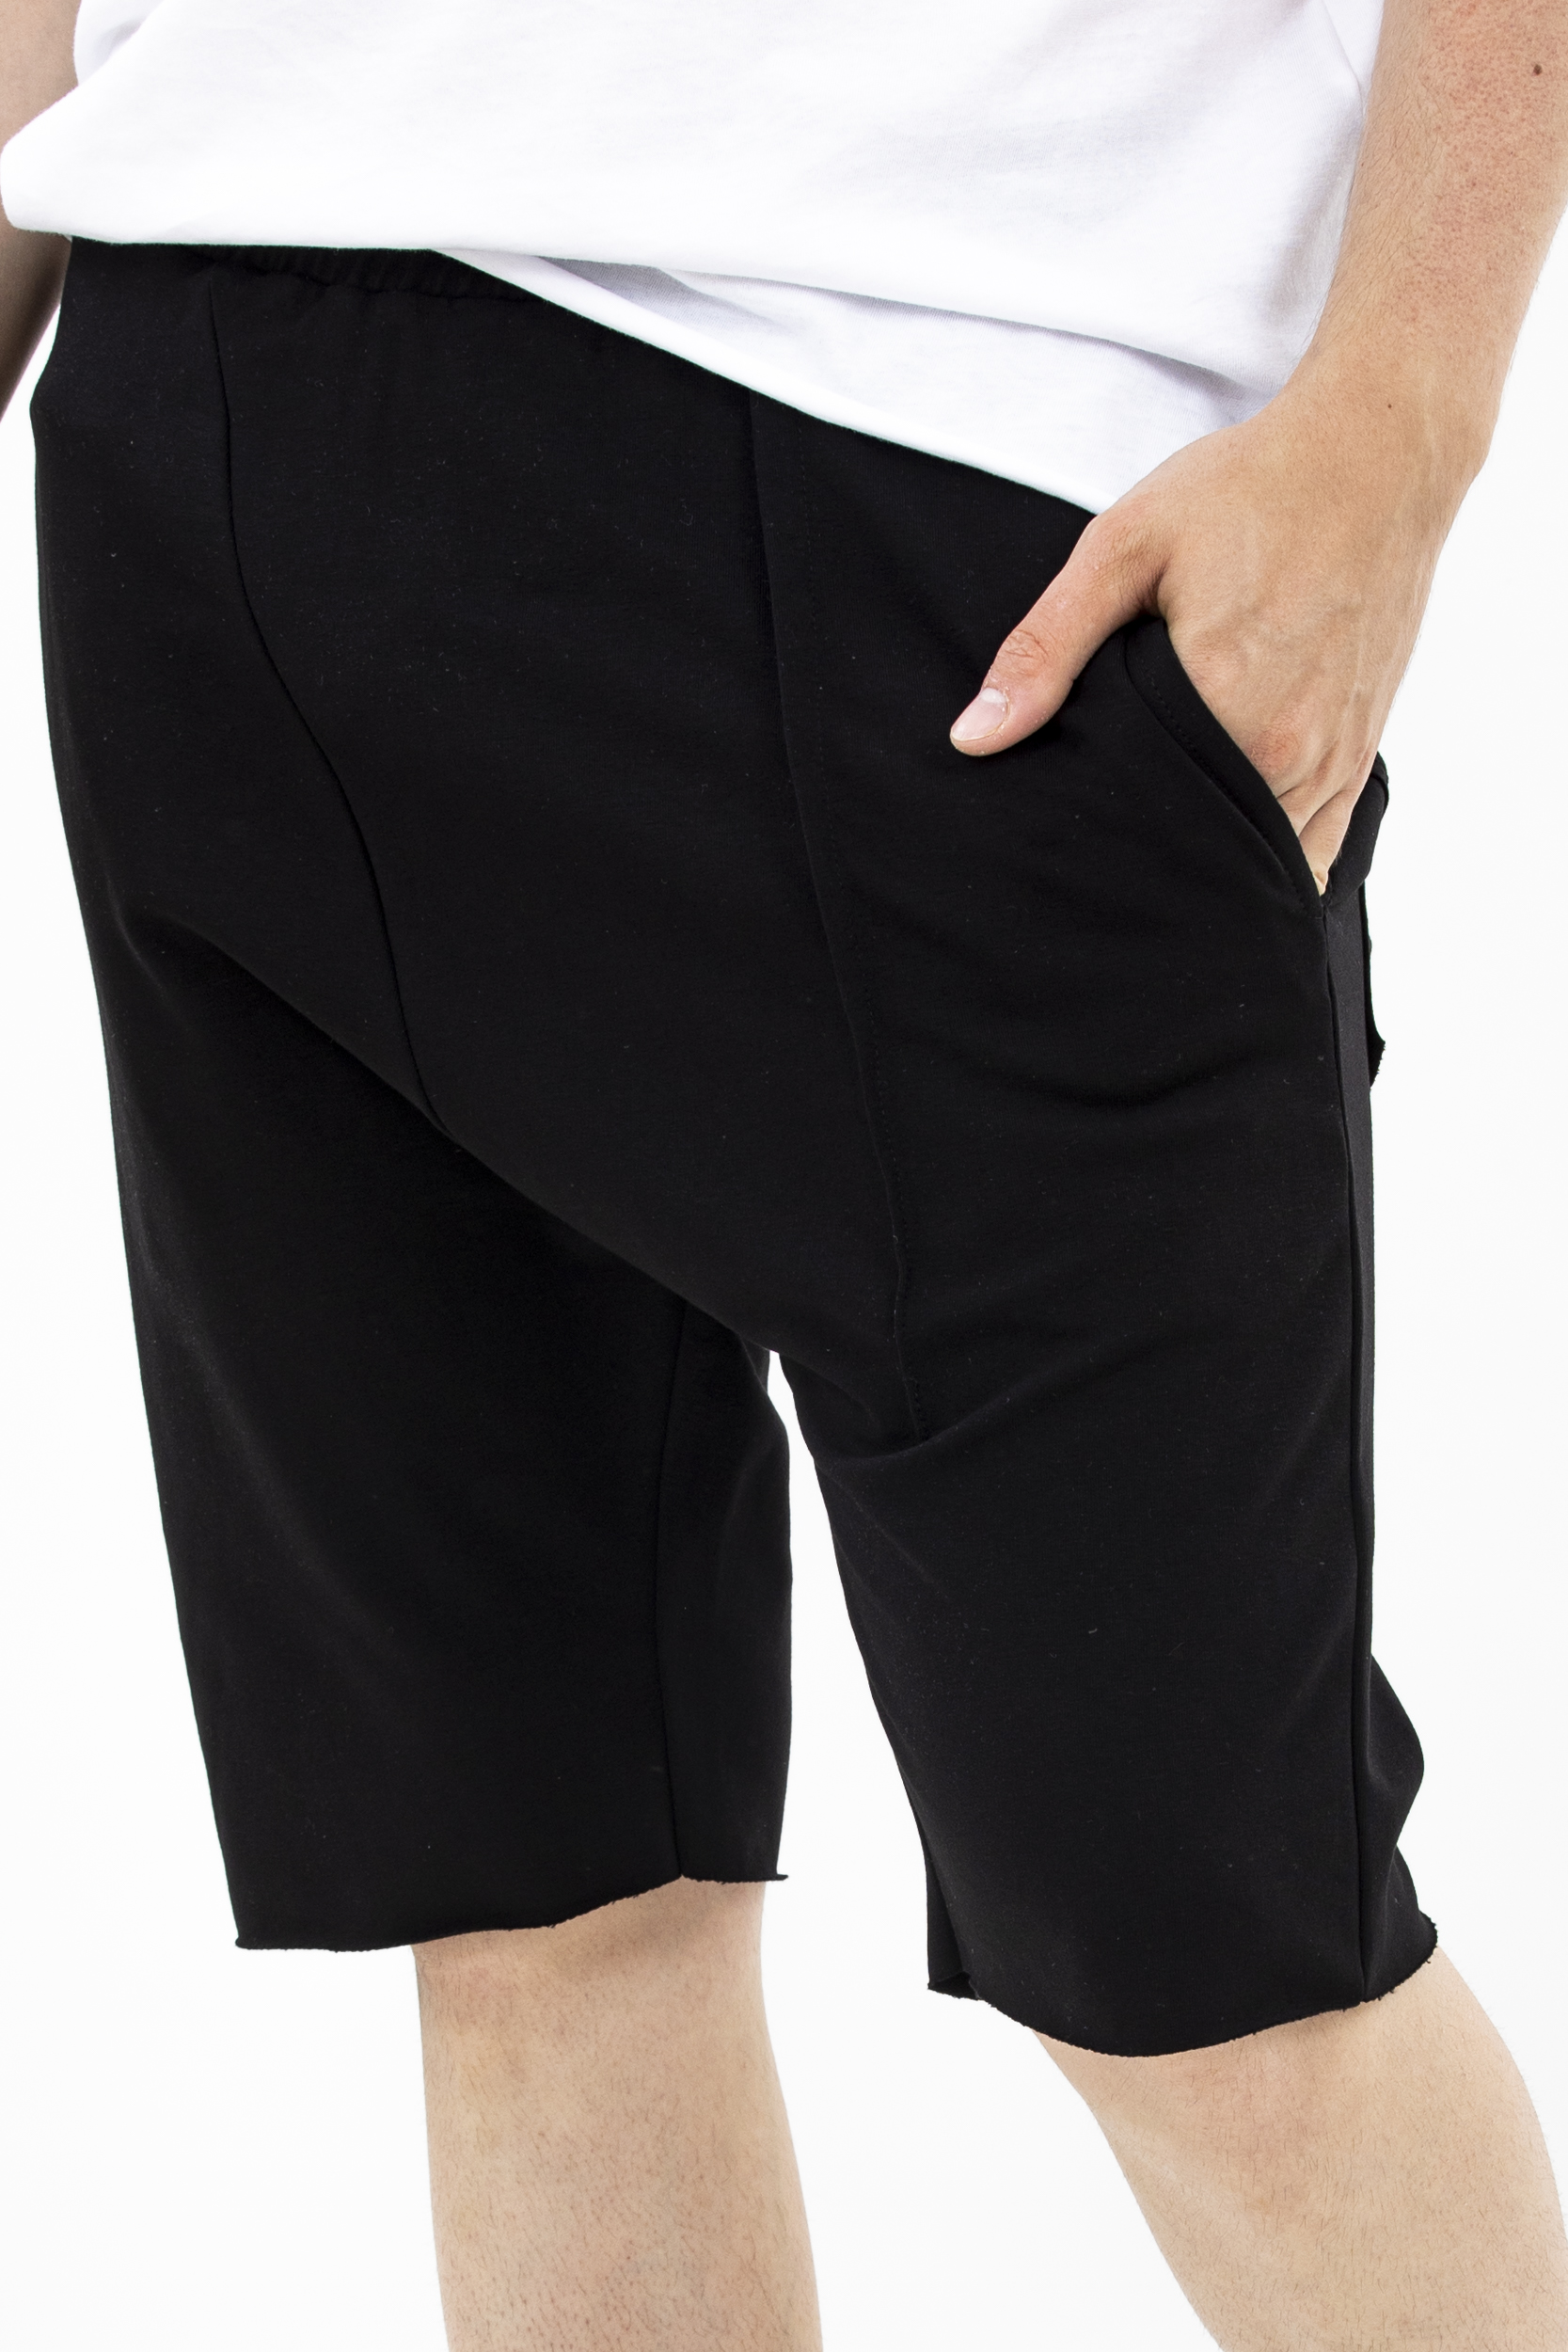 Pantaloni short baggy cotton